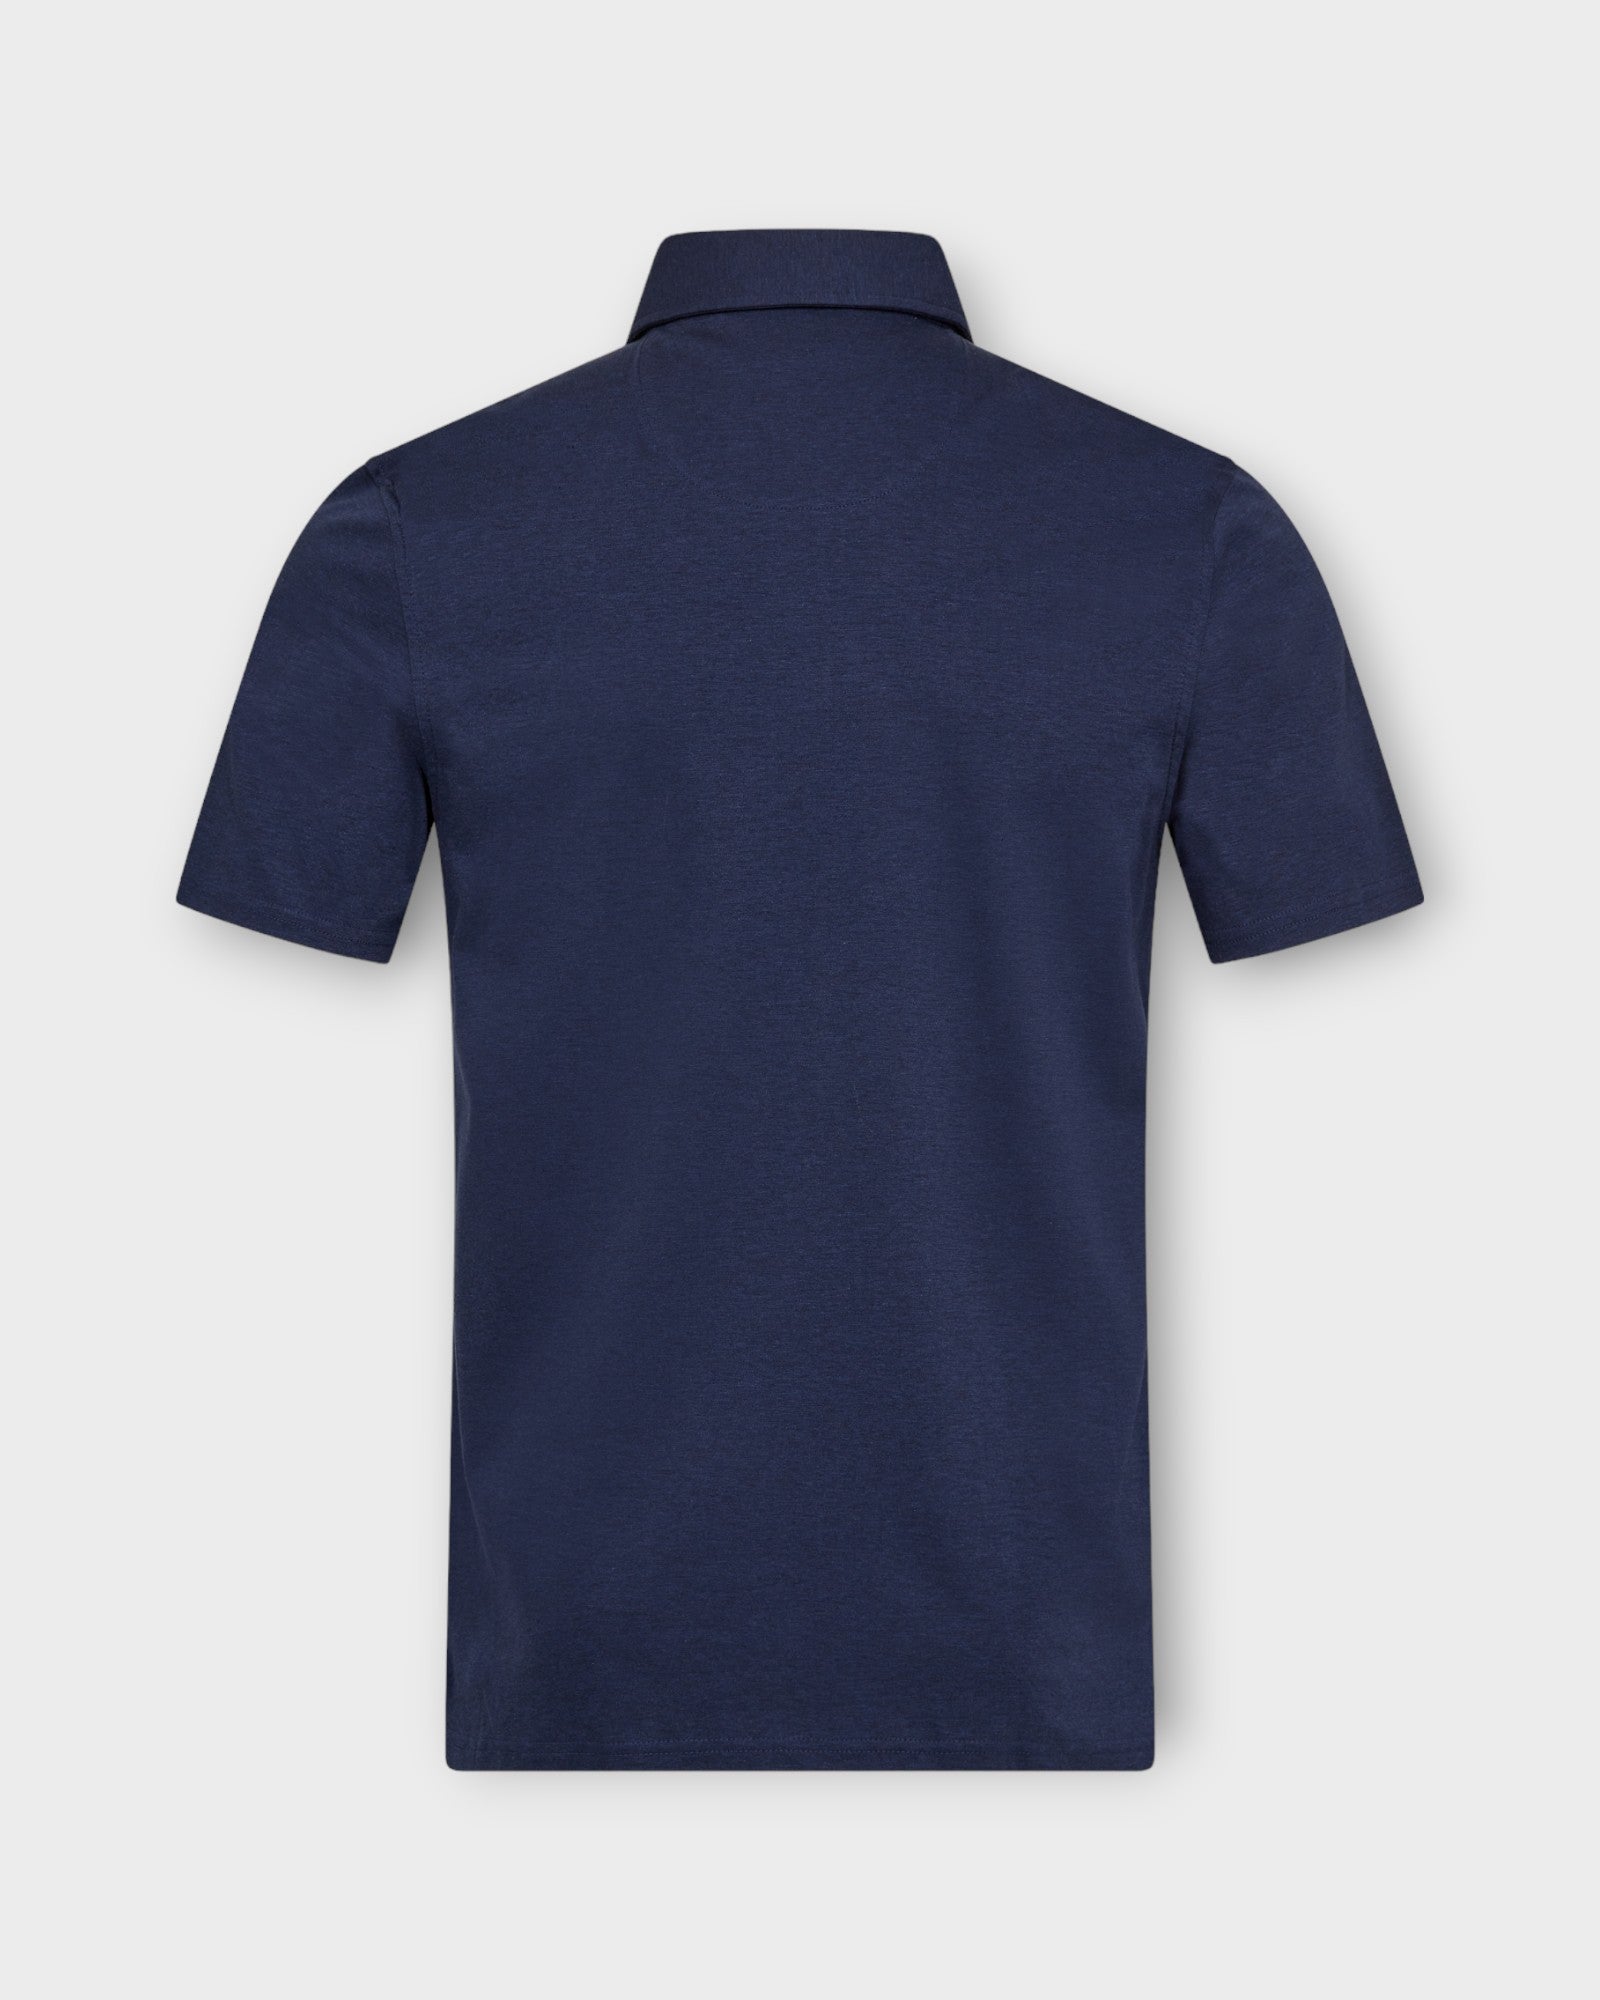 Cayo Regular Fit Polo Shirt Navy fra Bruun og Stengade. Mørke blå poloshirt til mænd. Her set bagfra.